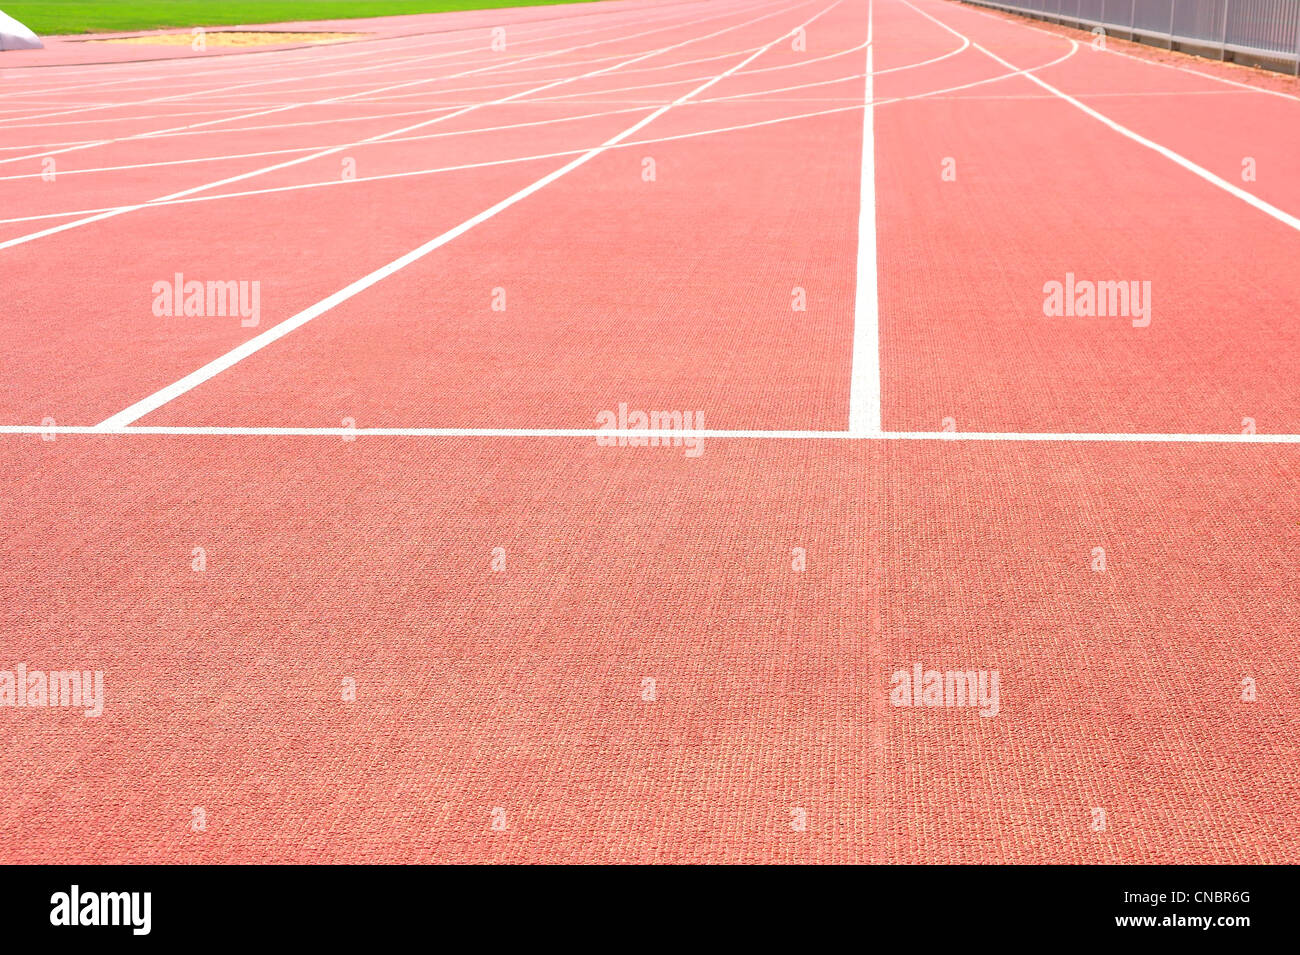 Athletics Track Running Stadium Stock Photo